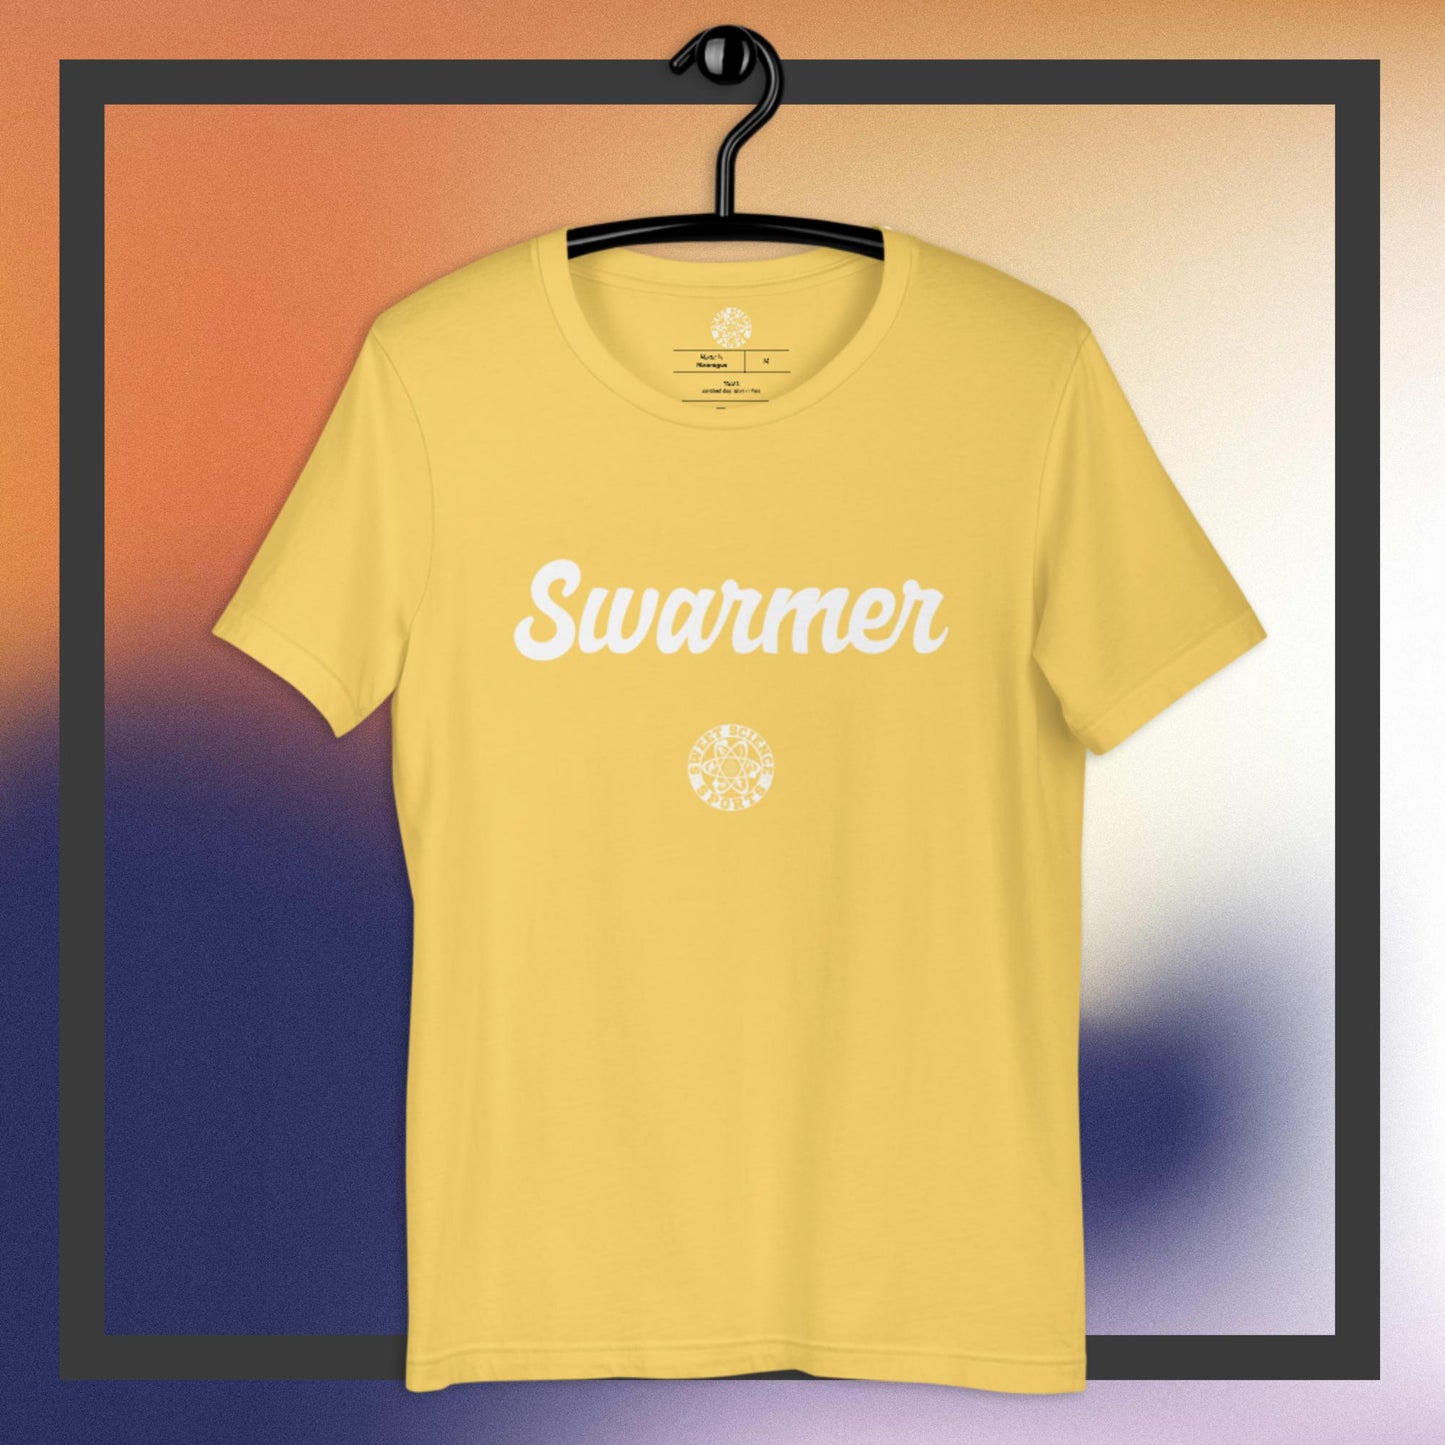 Sweet Science Sports Swarmer   t-shirt